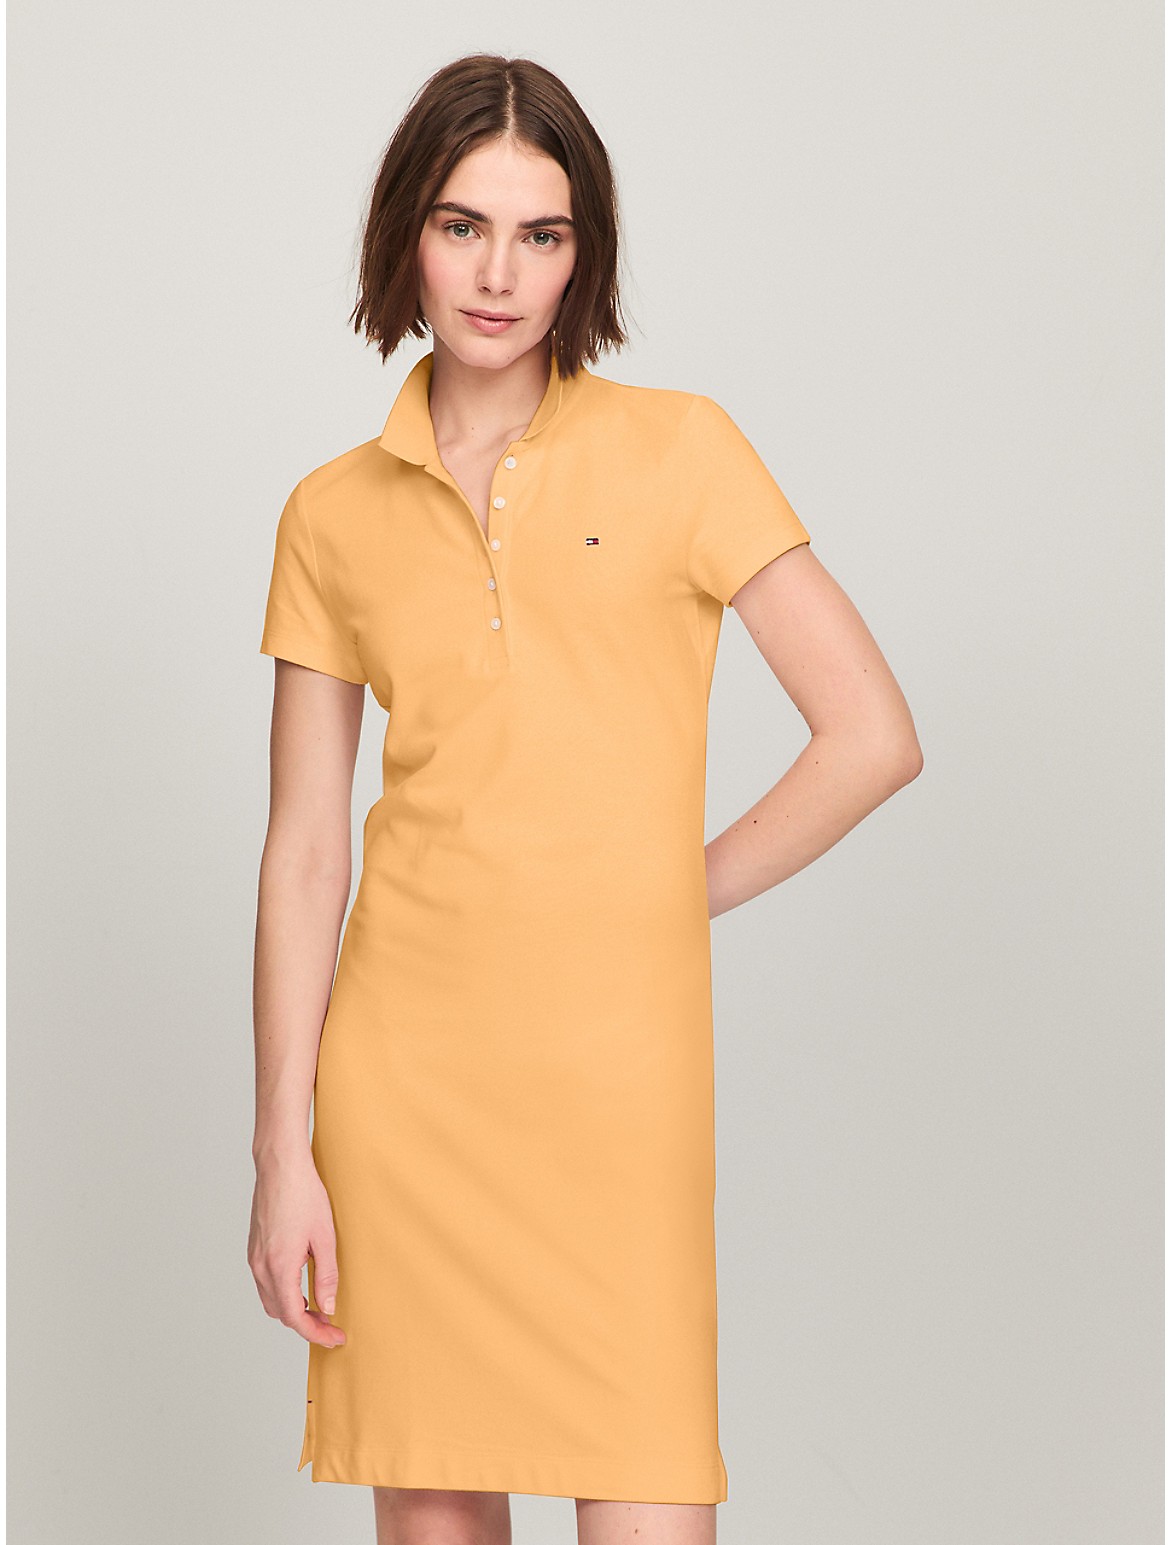 Tommy Hilfiger Women's Slim Fit Stretch Cotton Polo Dress